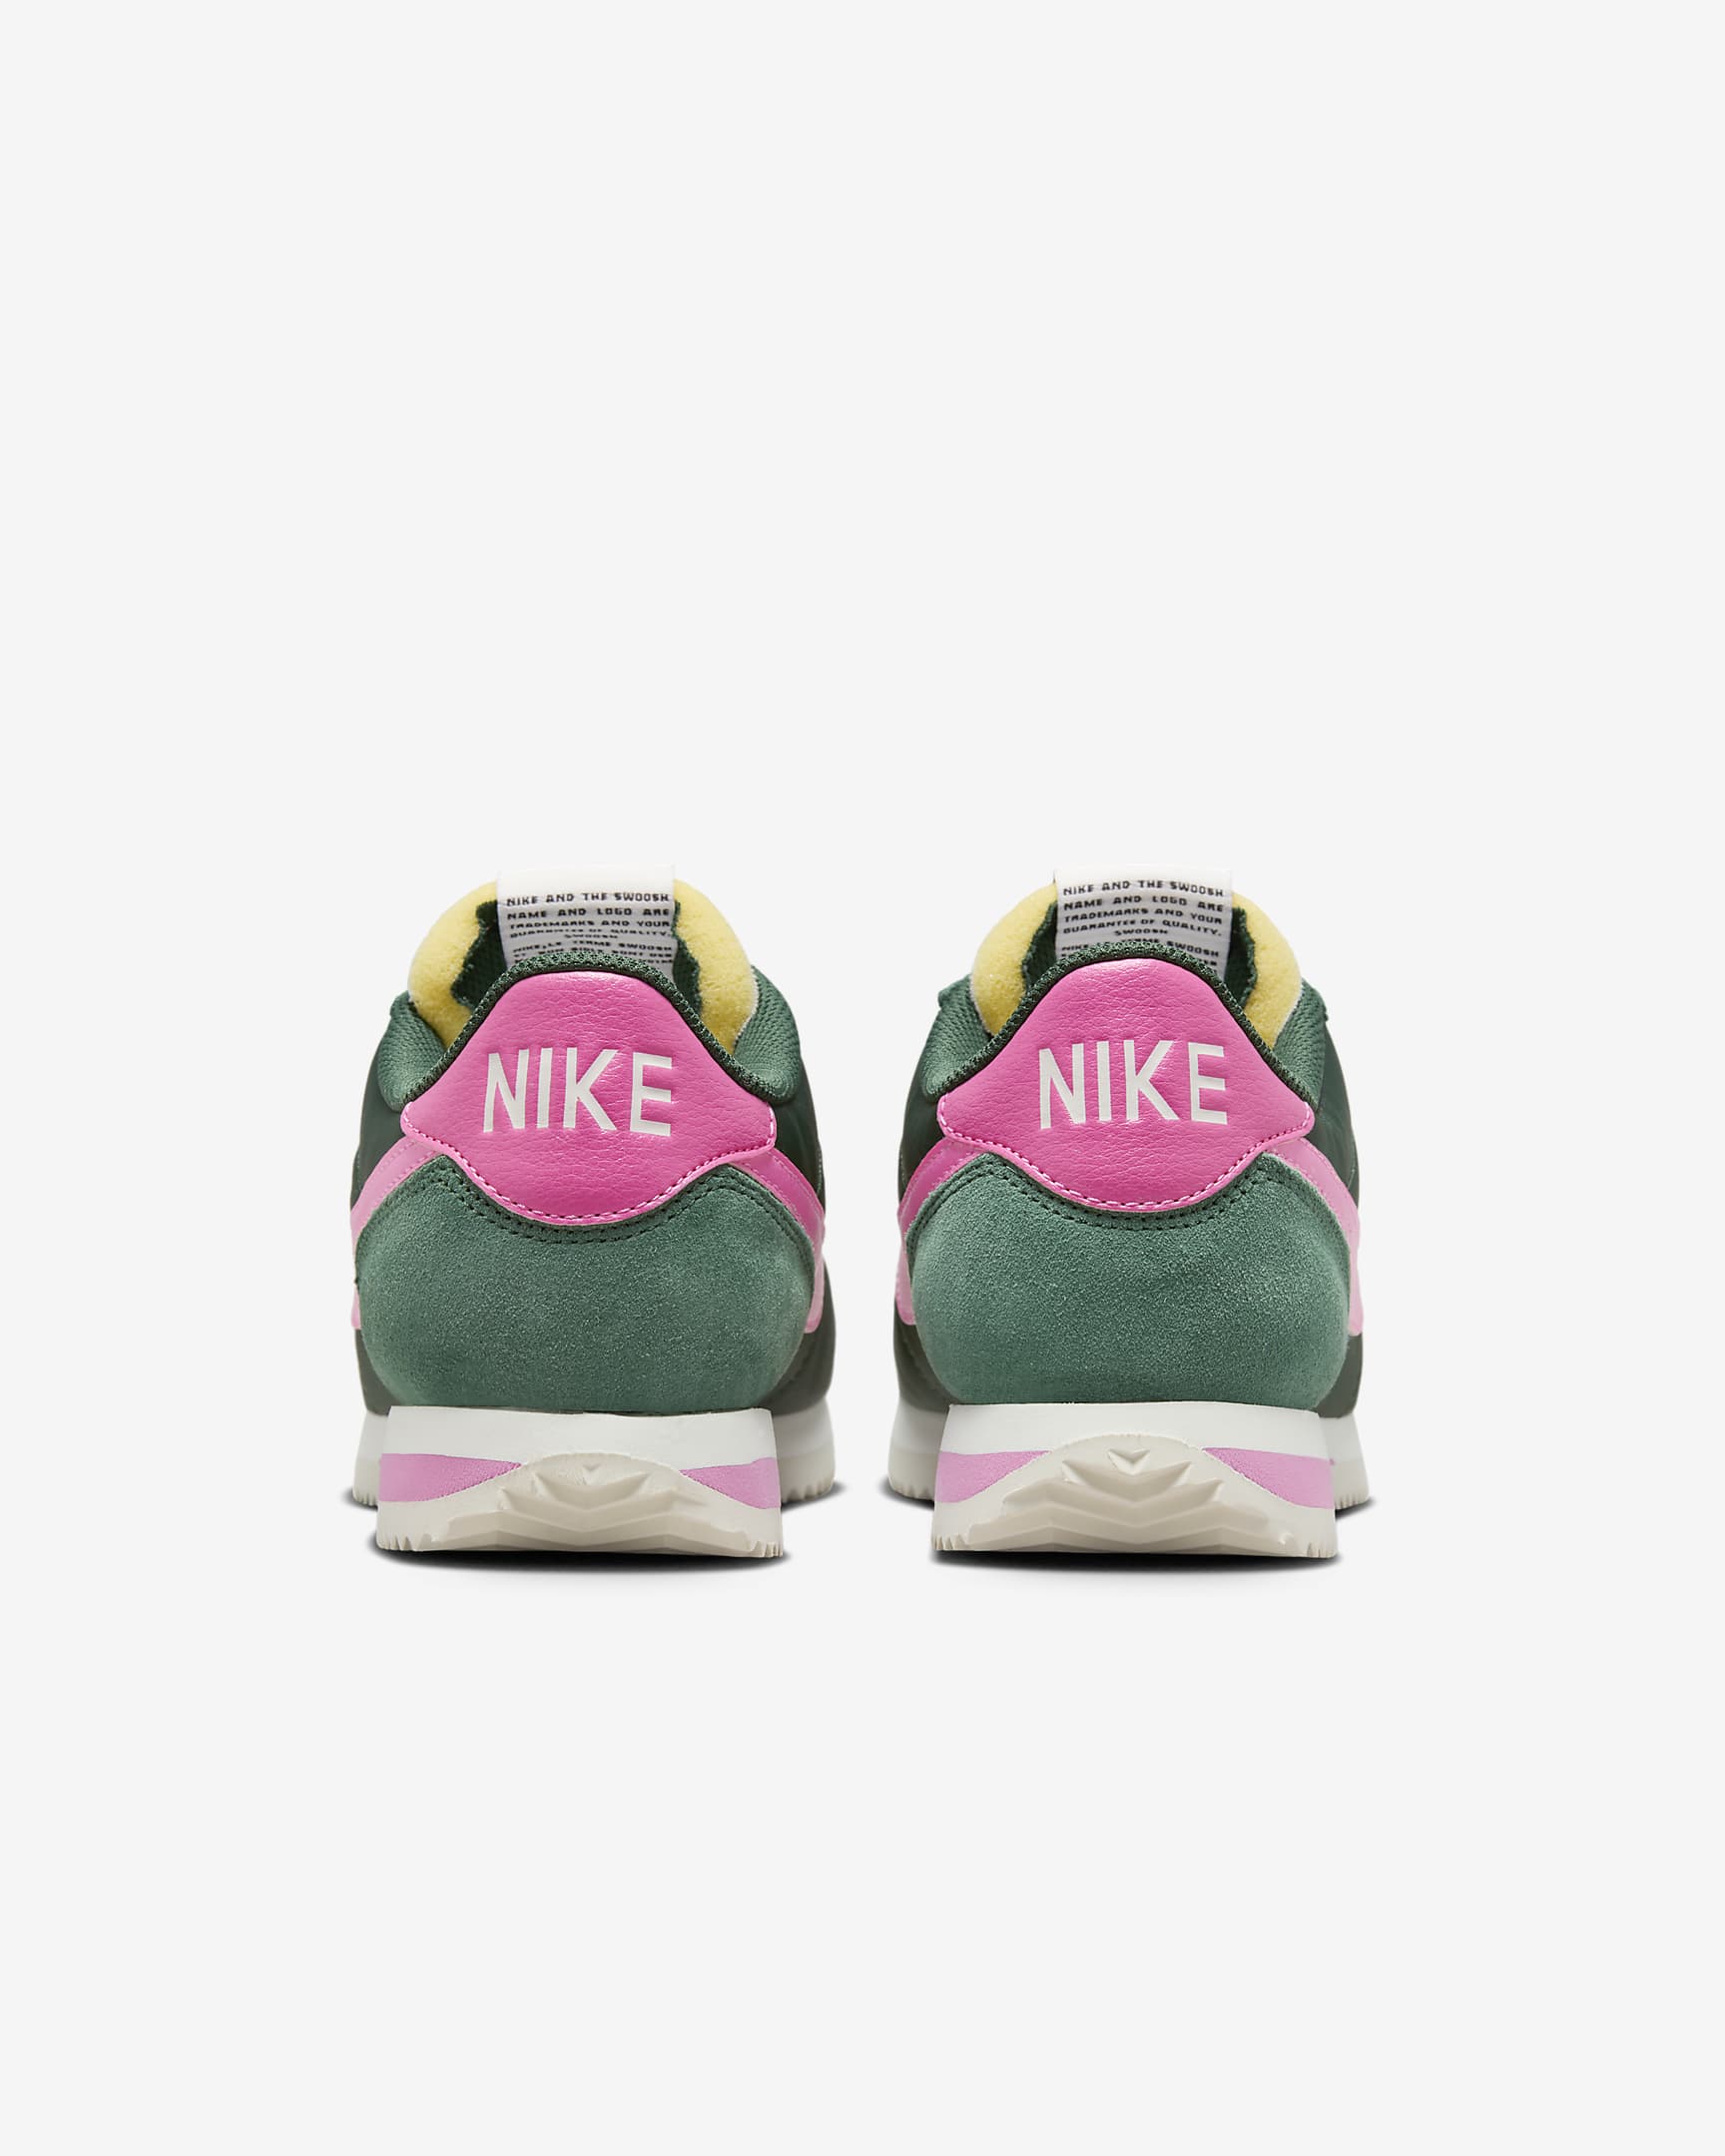 Chaussure Nike Cortez Textile - Fir/Sail/Team Orange/Pinksicle